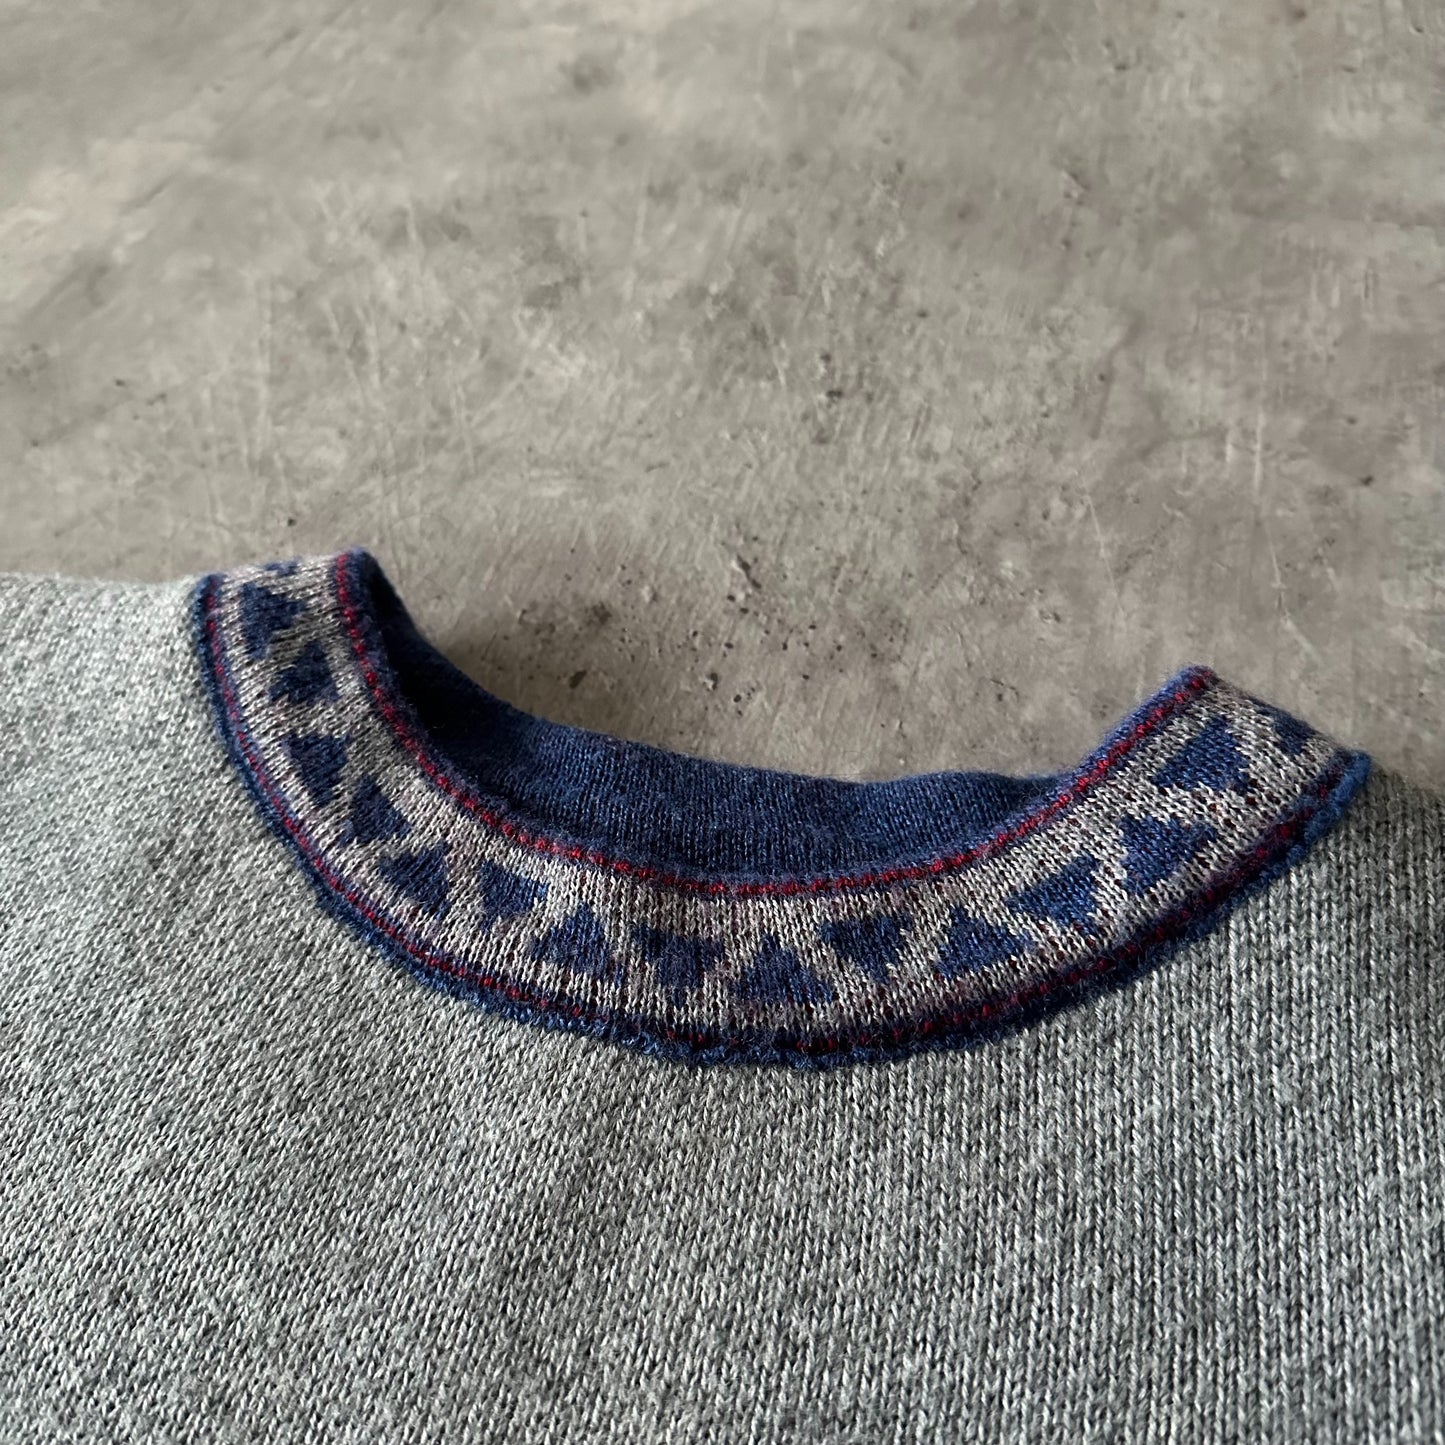 Vintage Quiksilver Sweater